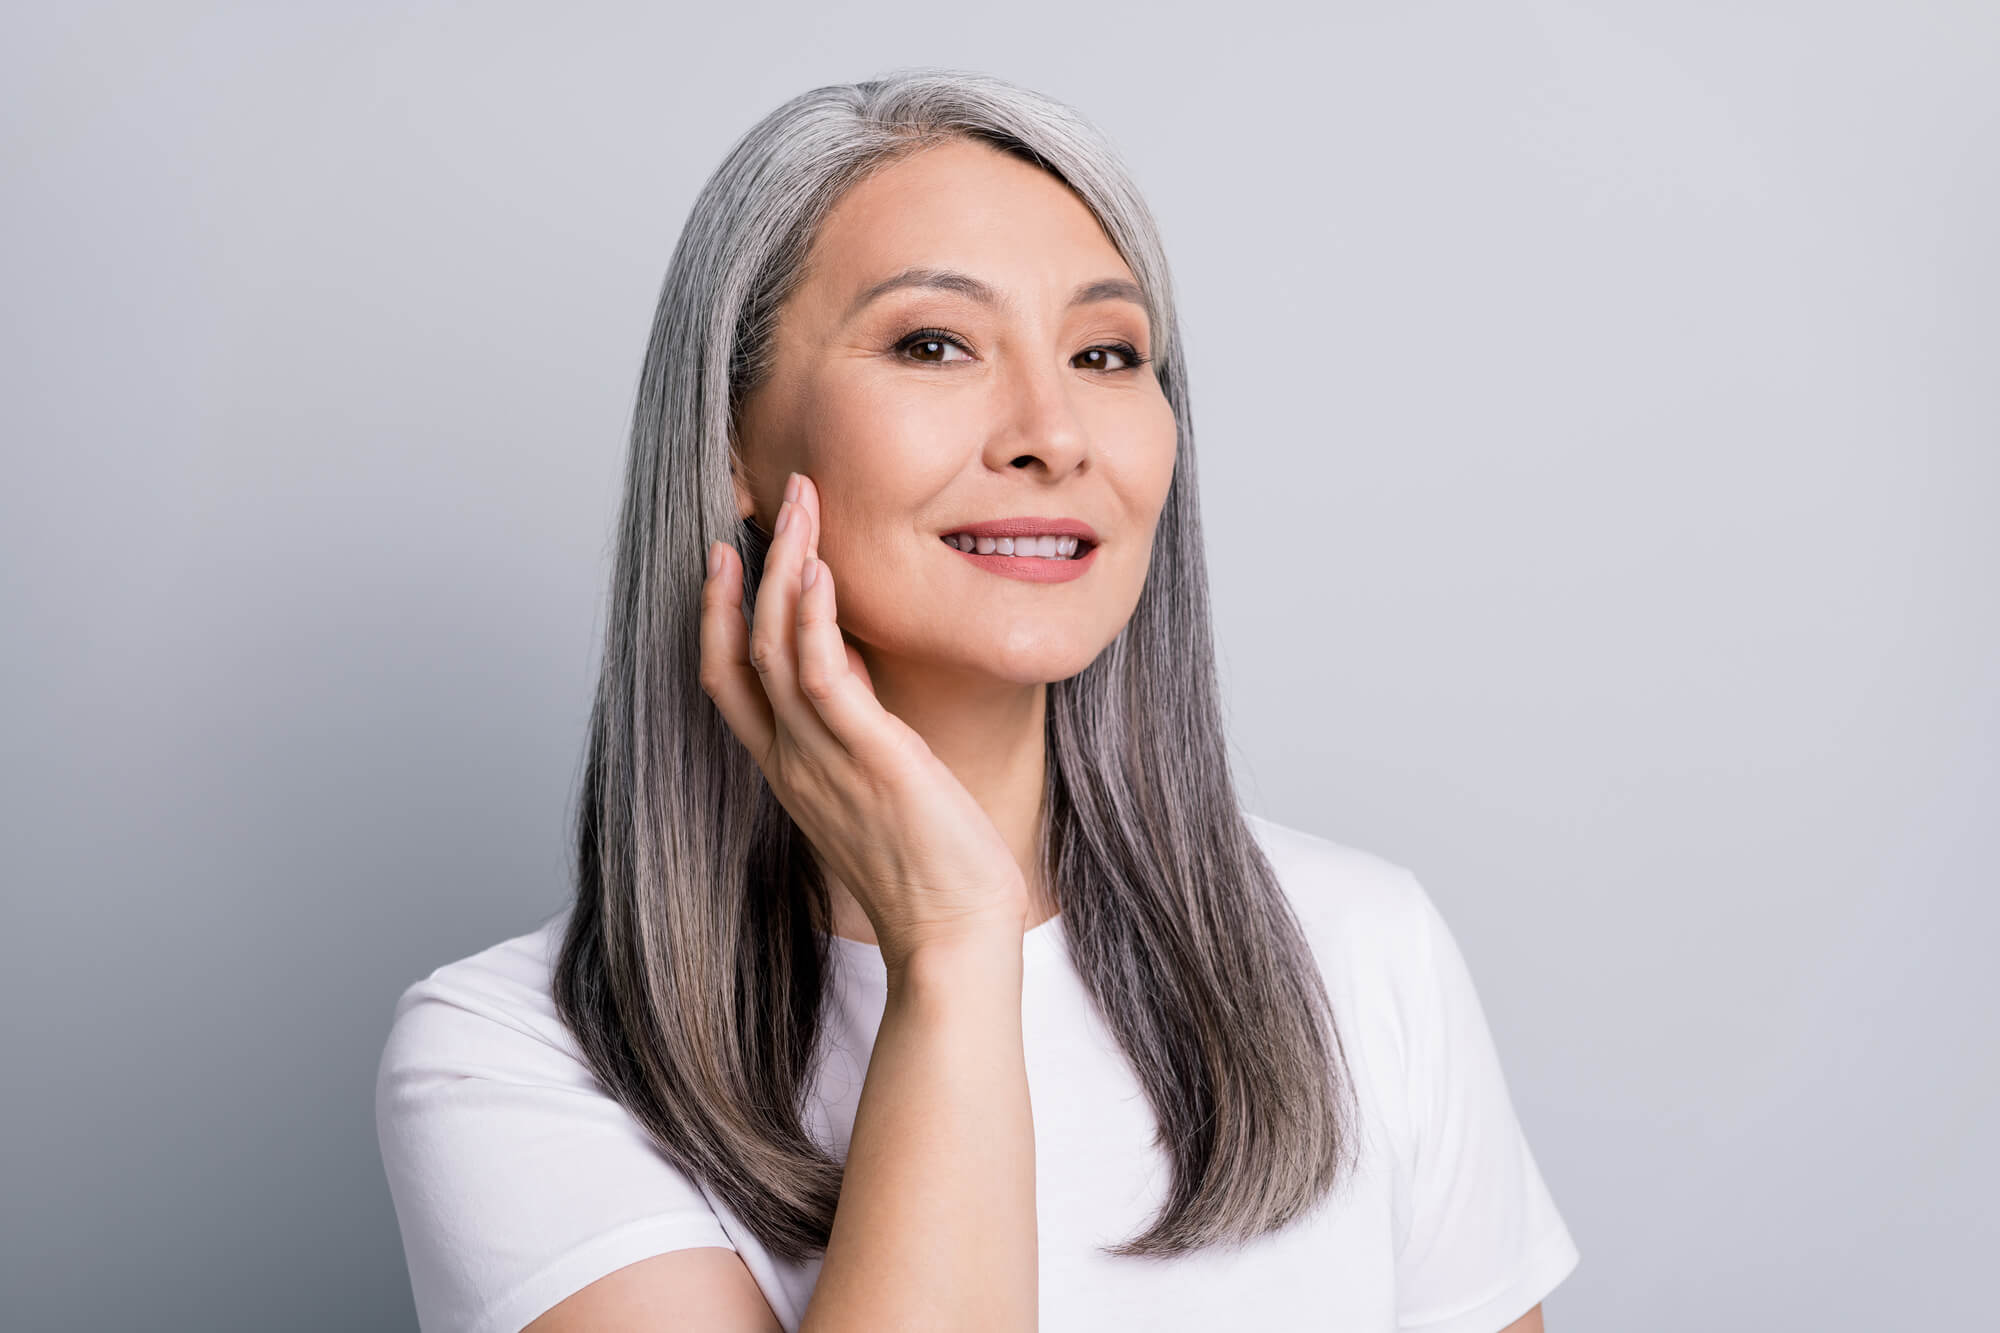 White Hair Treatment in Singapore | Reverse Premature Grey Hair - Bee Choo  Ladies